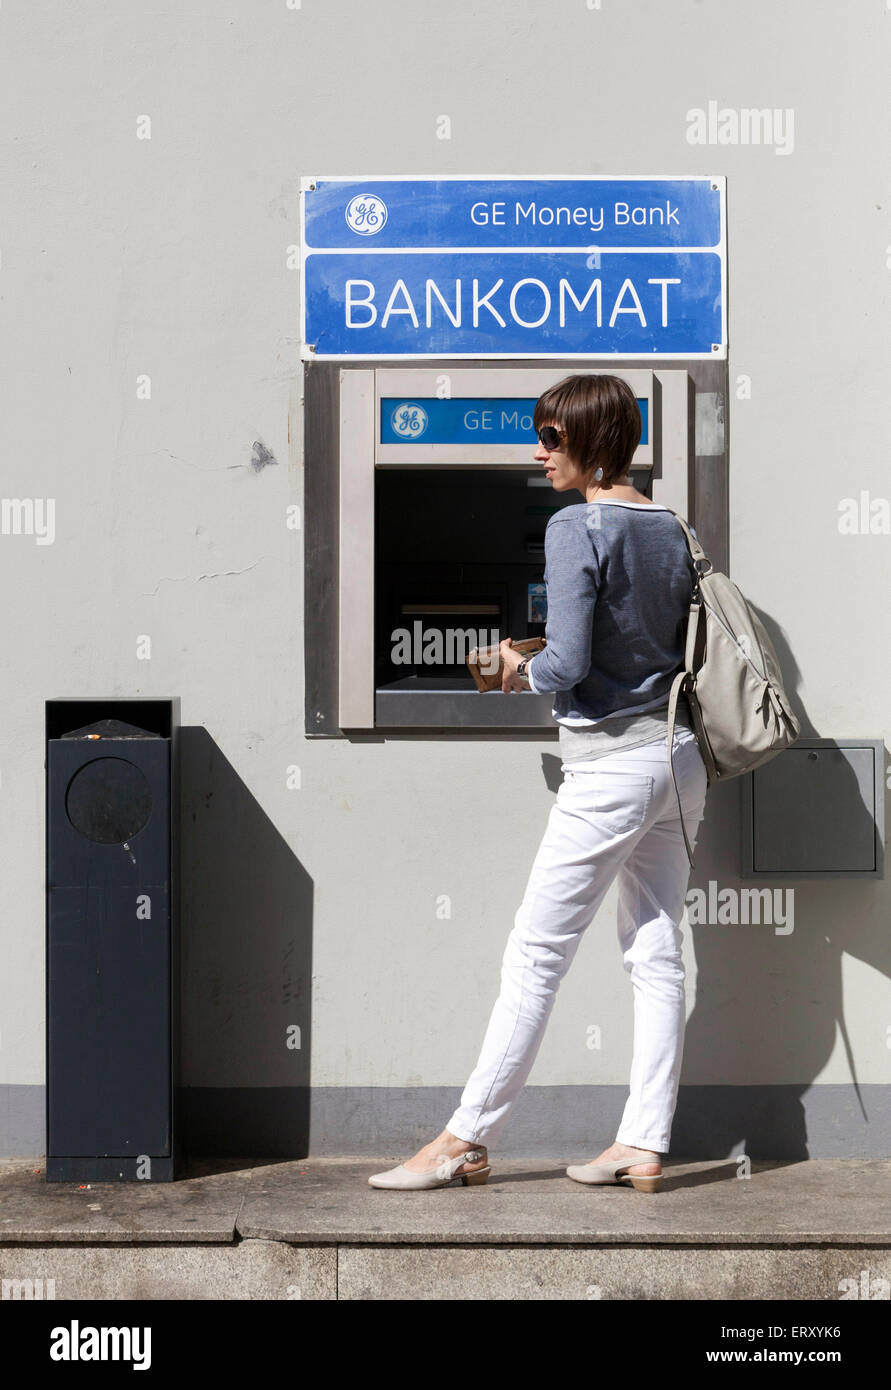 GE Money Bank woman ATM money withdraw, Czech Republic Stock Photo